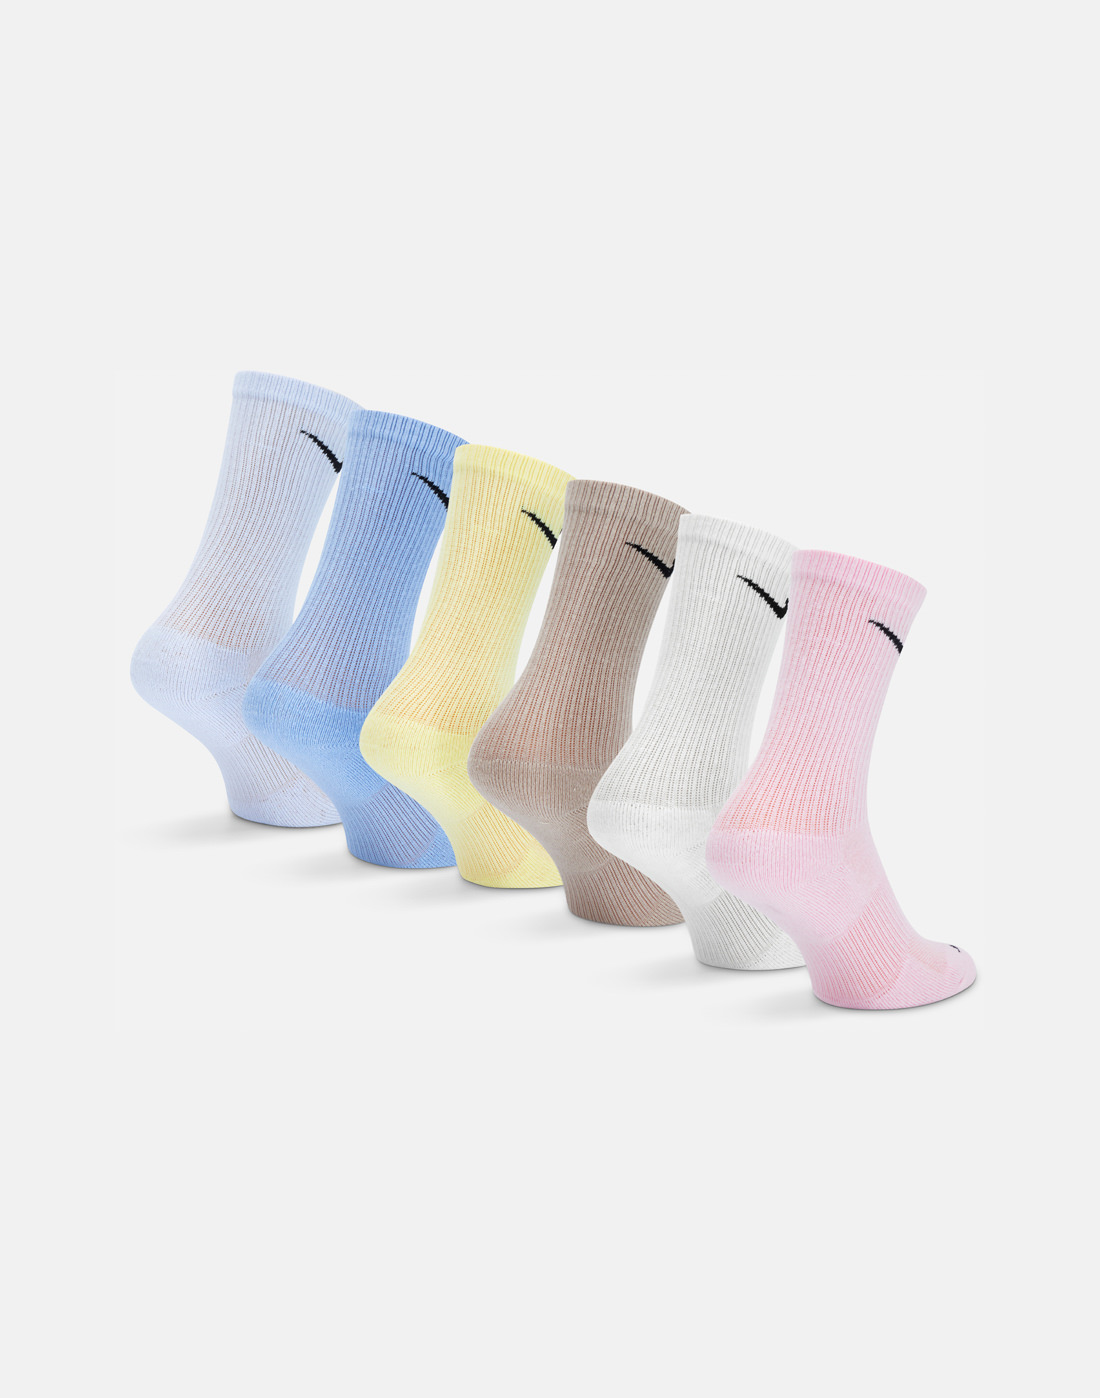 Nike Everyday Plus Cushion 6 Pack Crew Socks - Assorted | Life Style ...